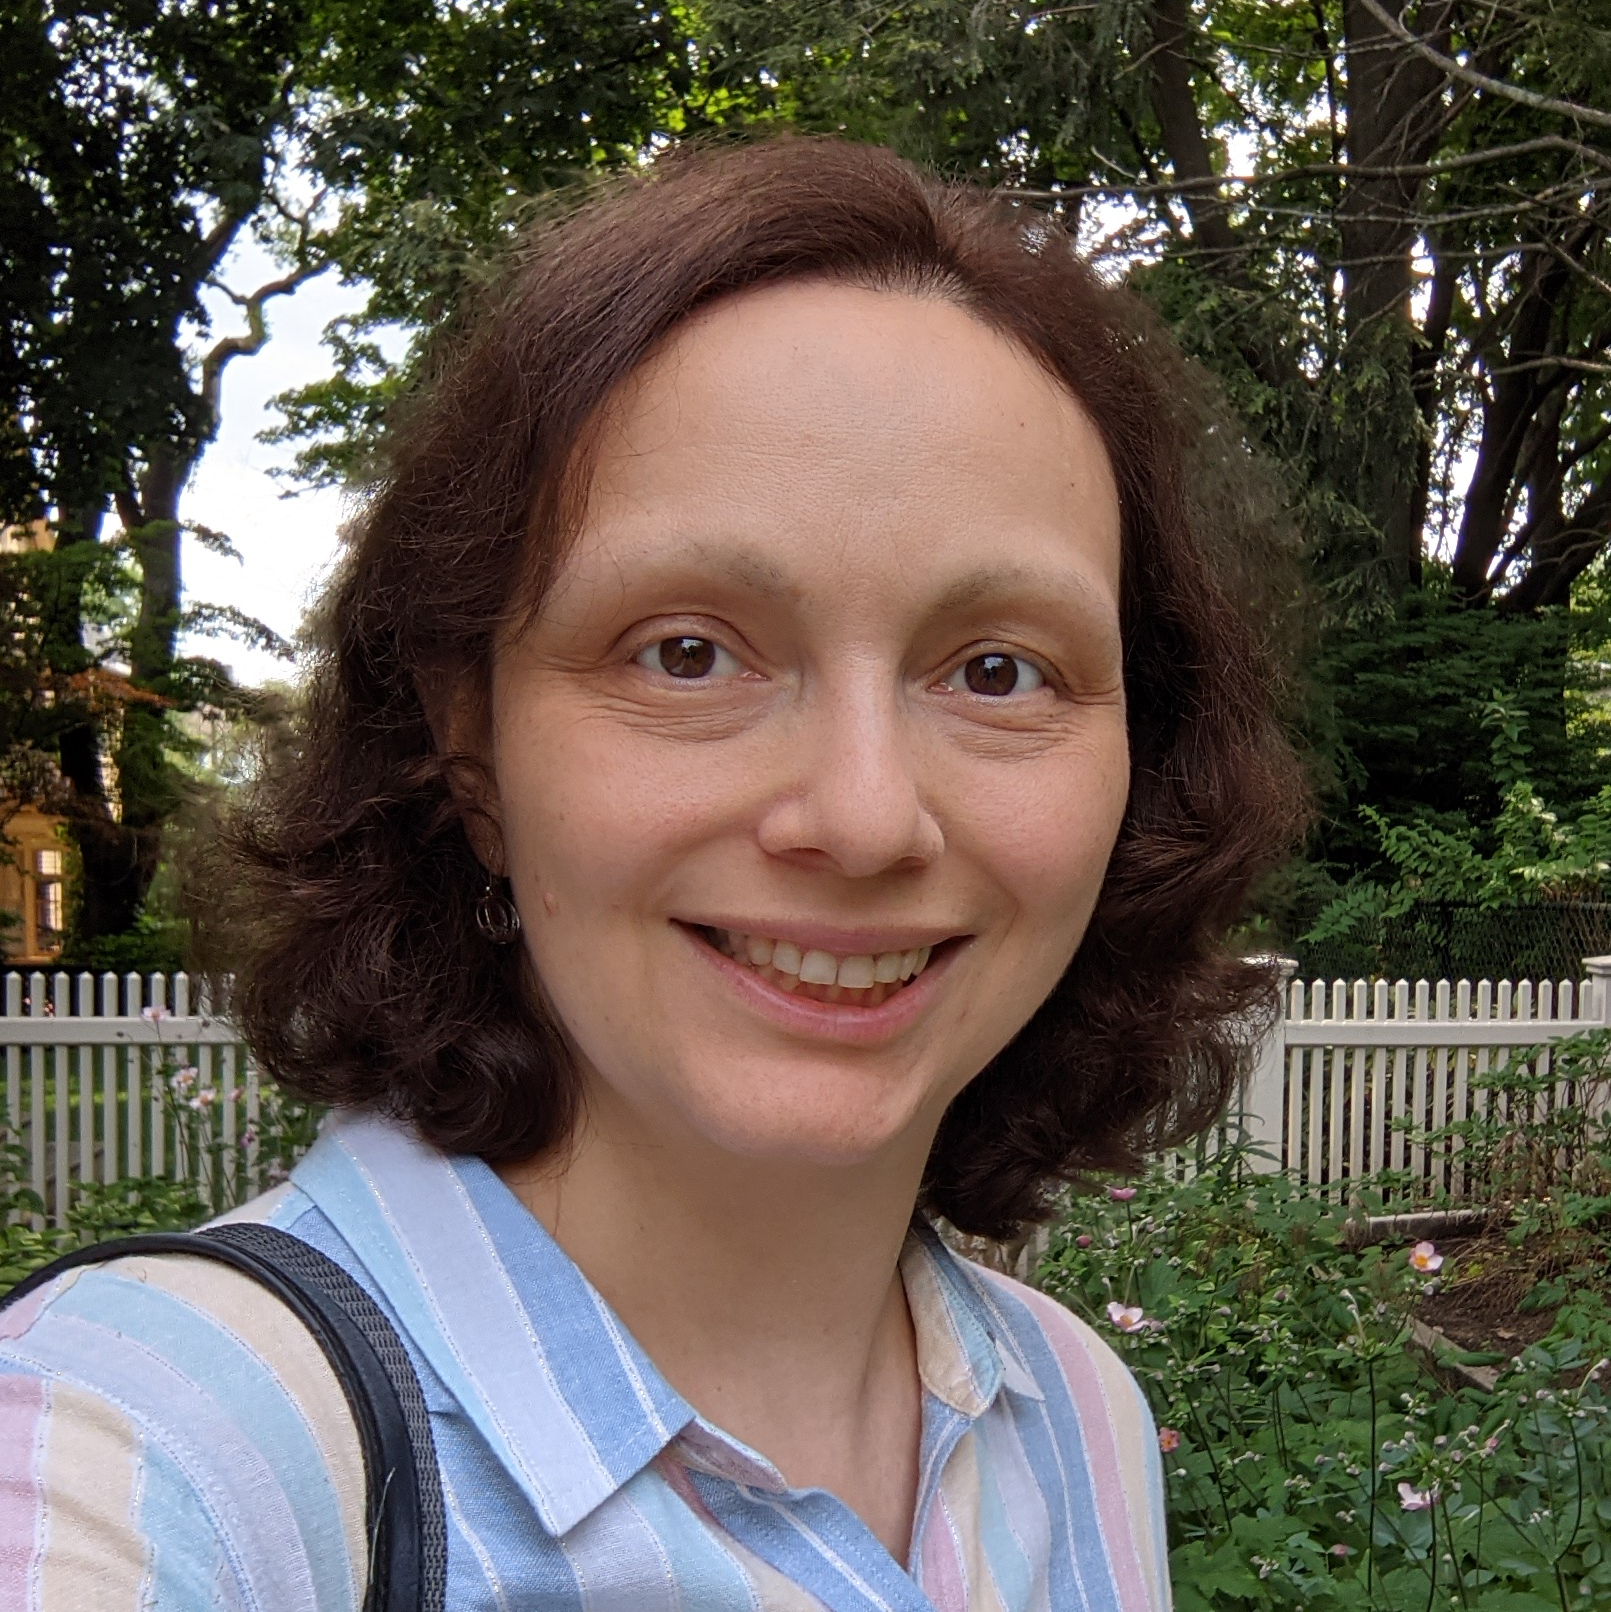 Image of Marina Zhurakhinskaya taken on 2022-06-14